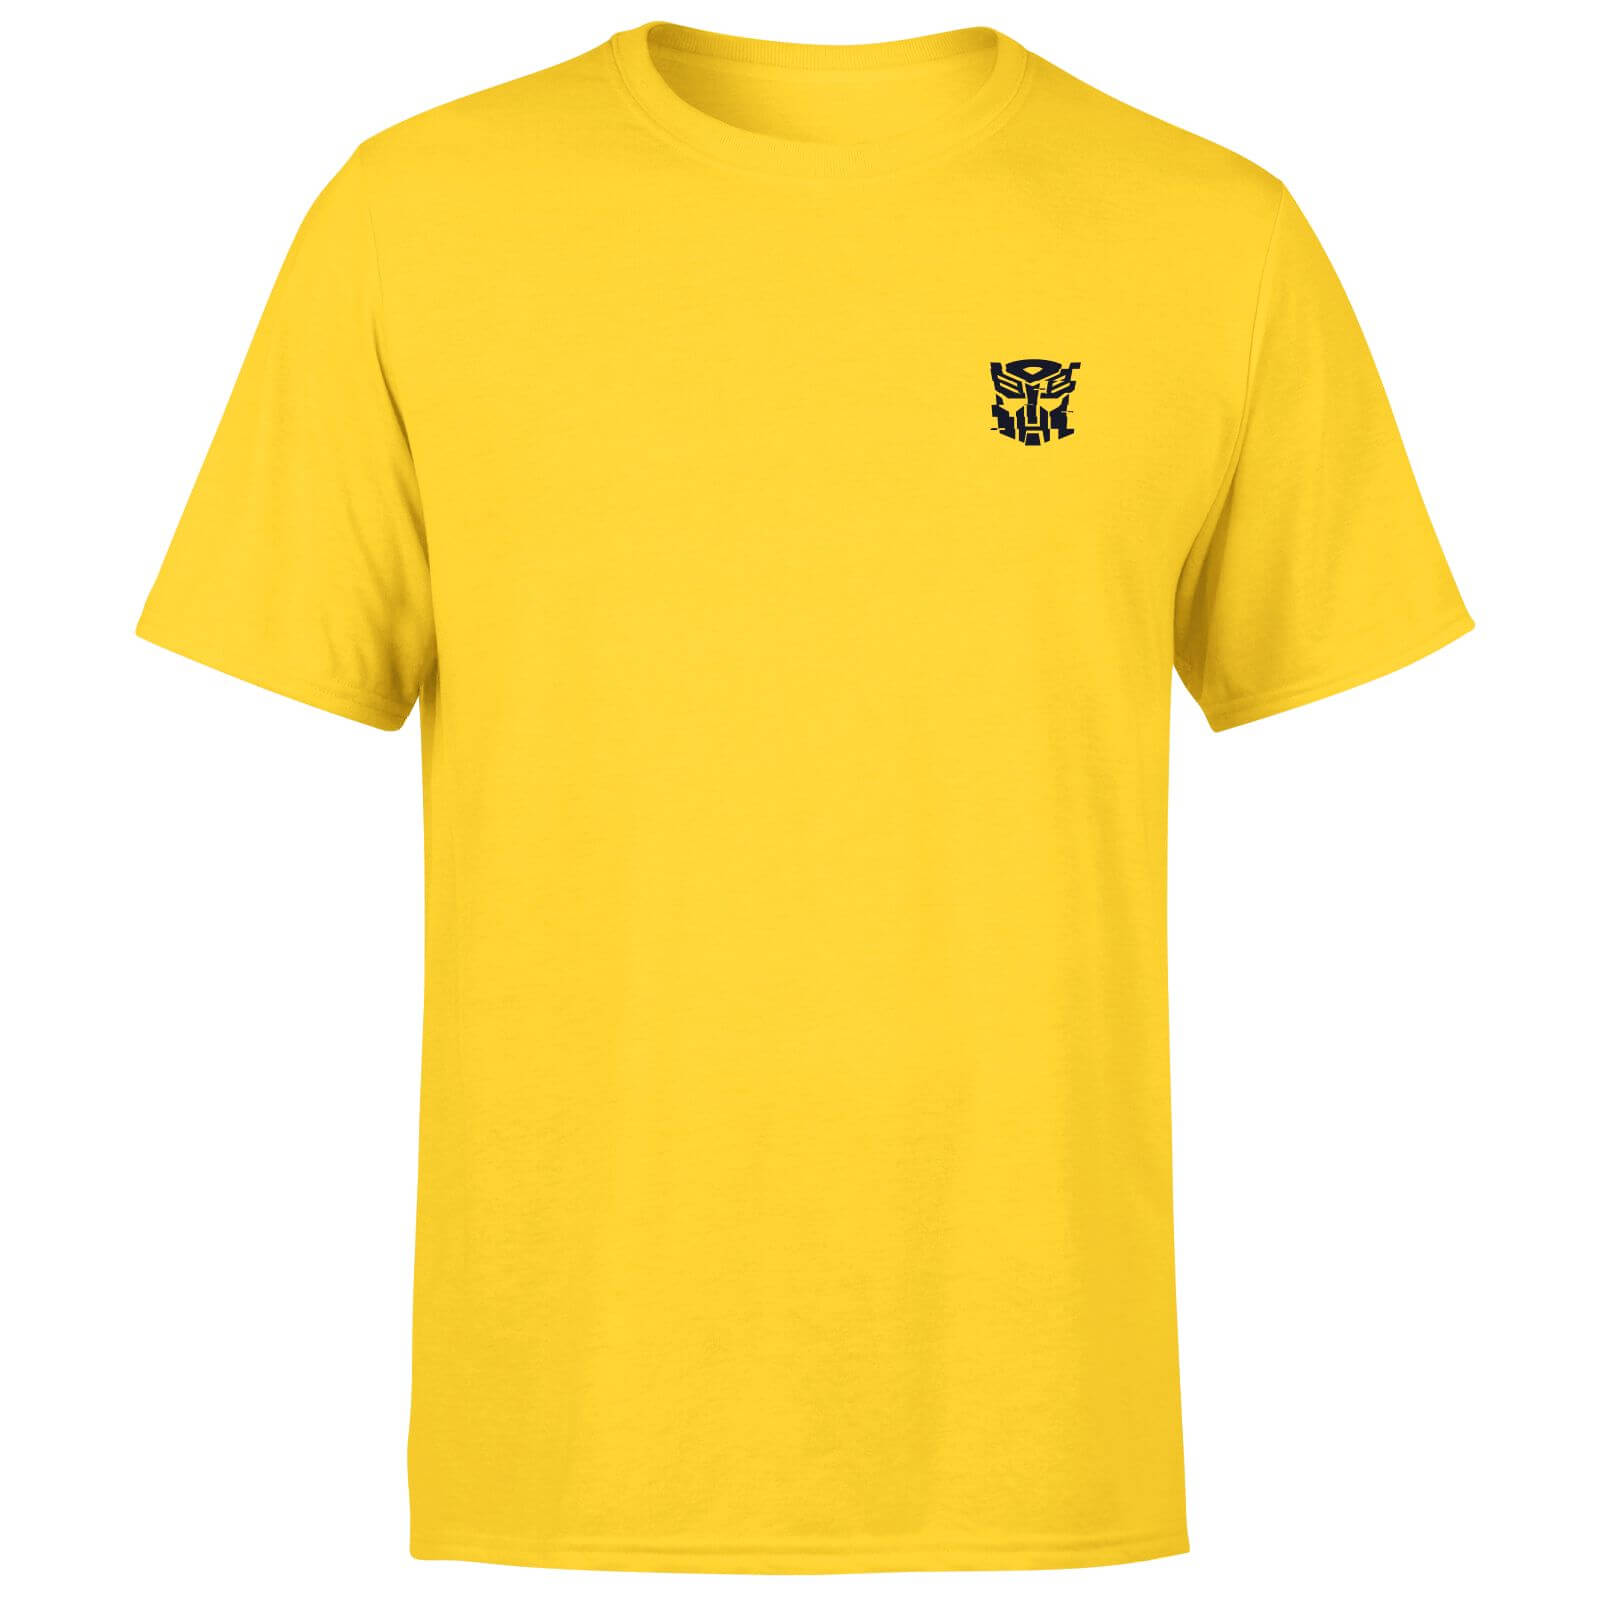 T-shirt Transformers Bumble Bee - Jaune - Unisexe - XS